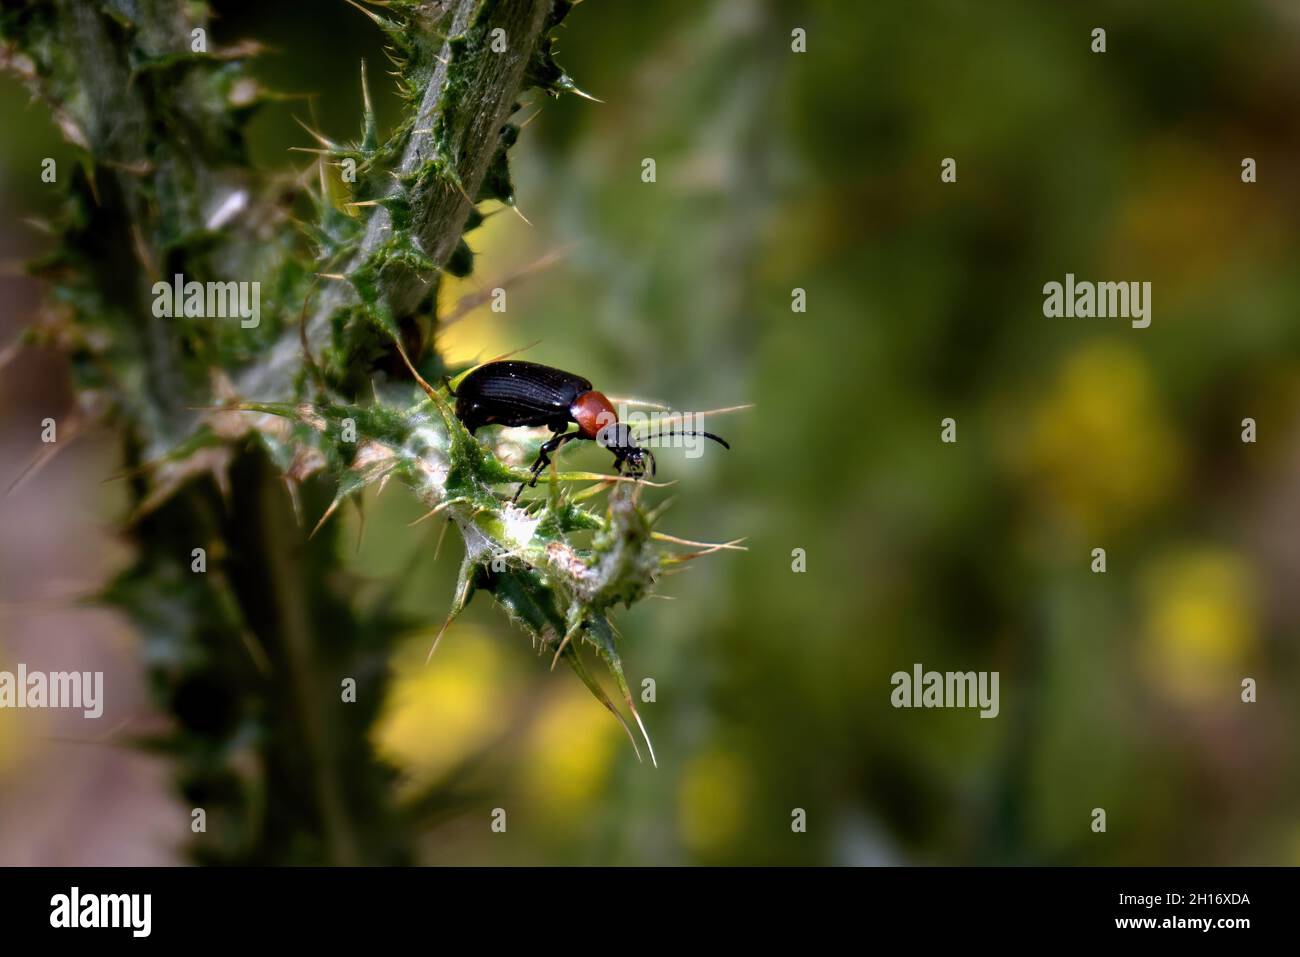 Beetle on thistle leaf in Madrid, Spain Stock Photo